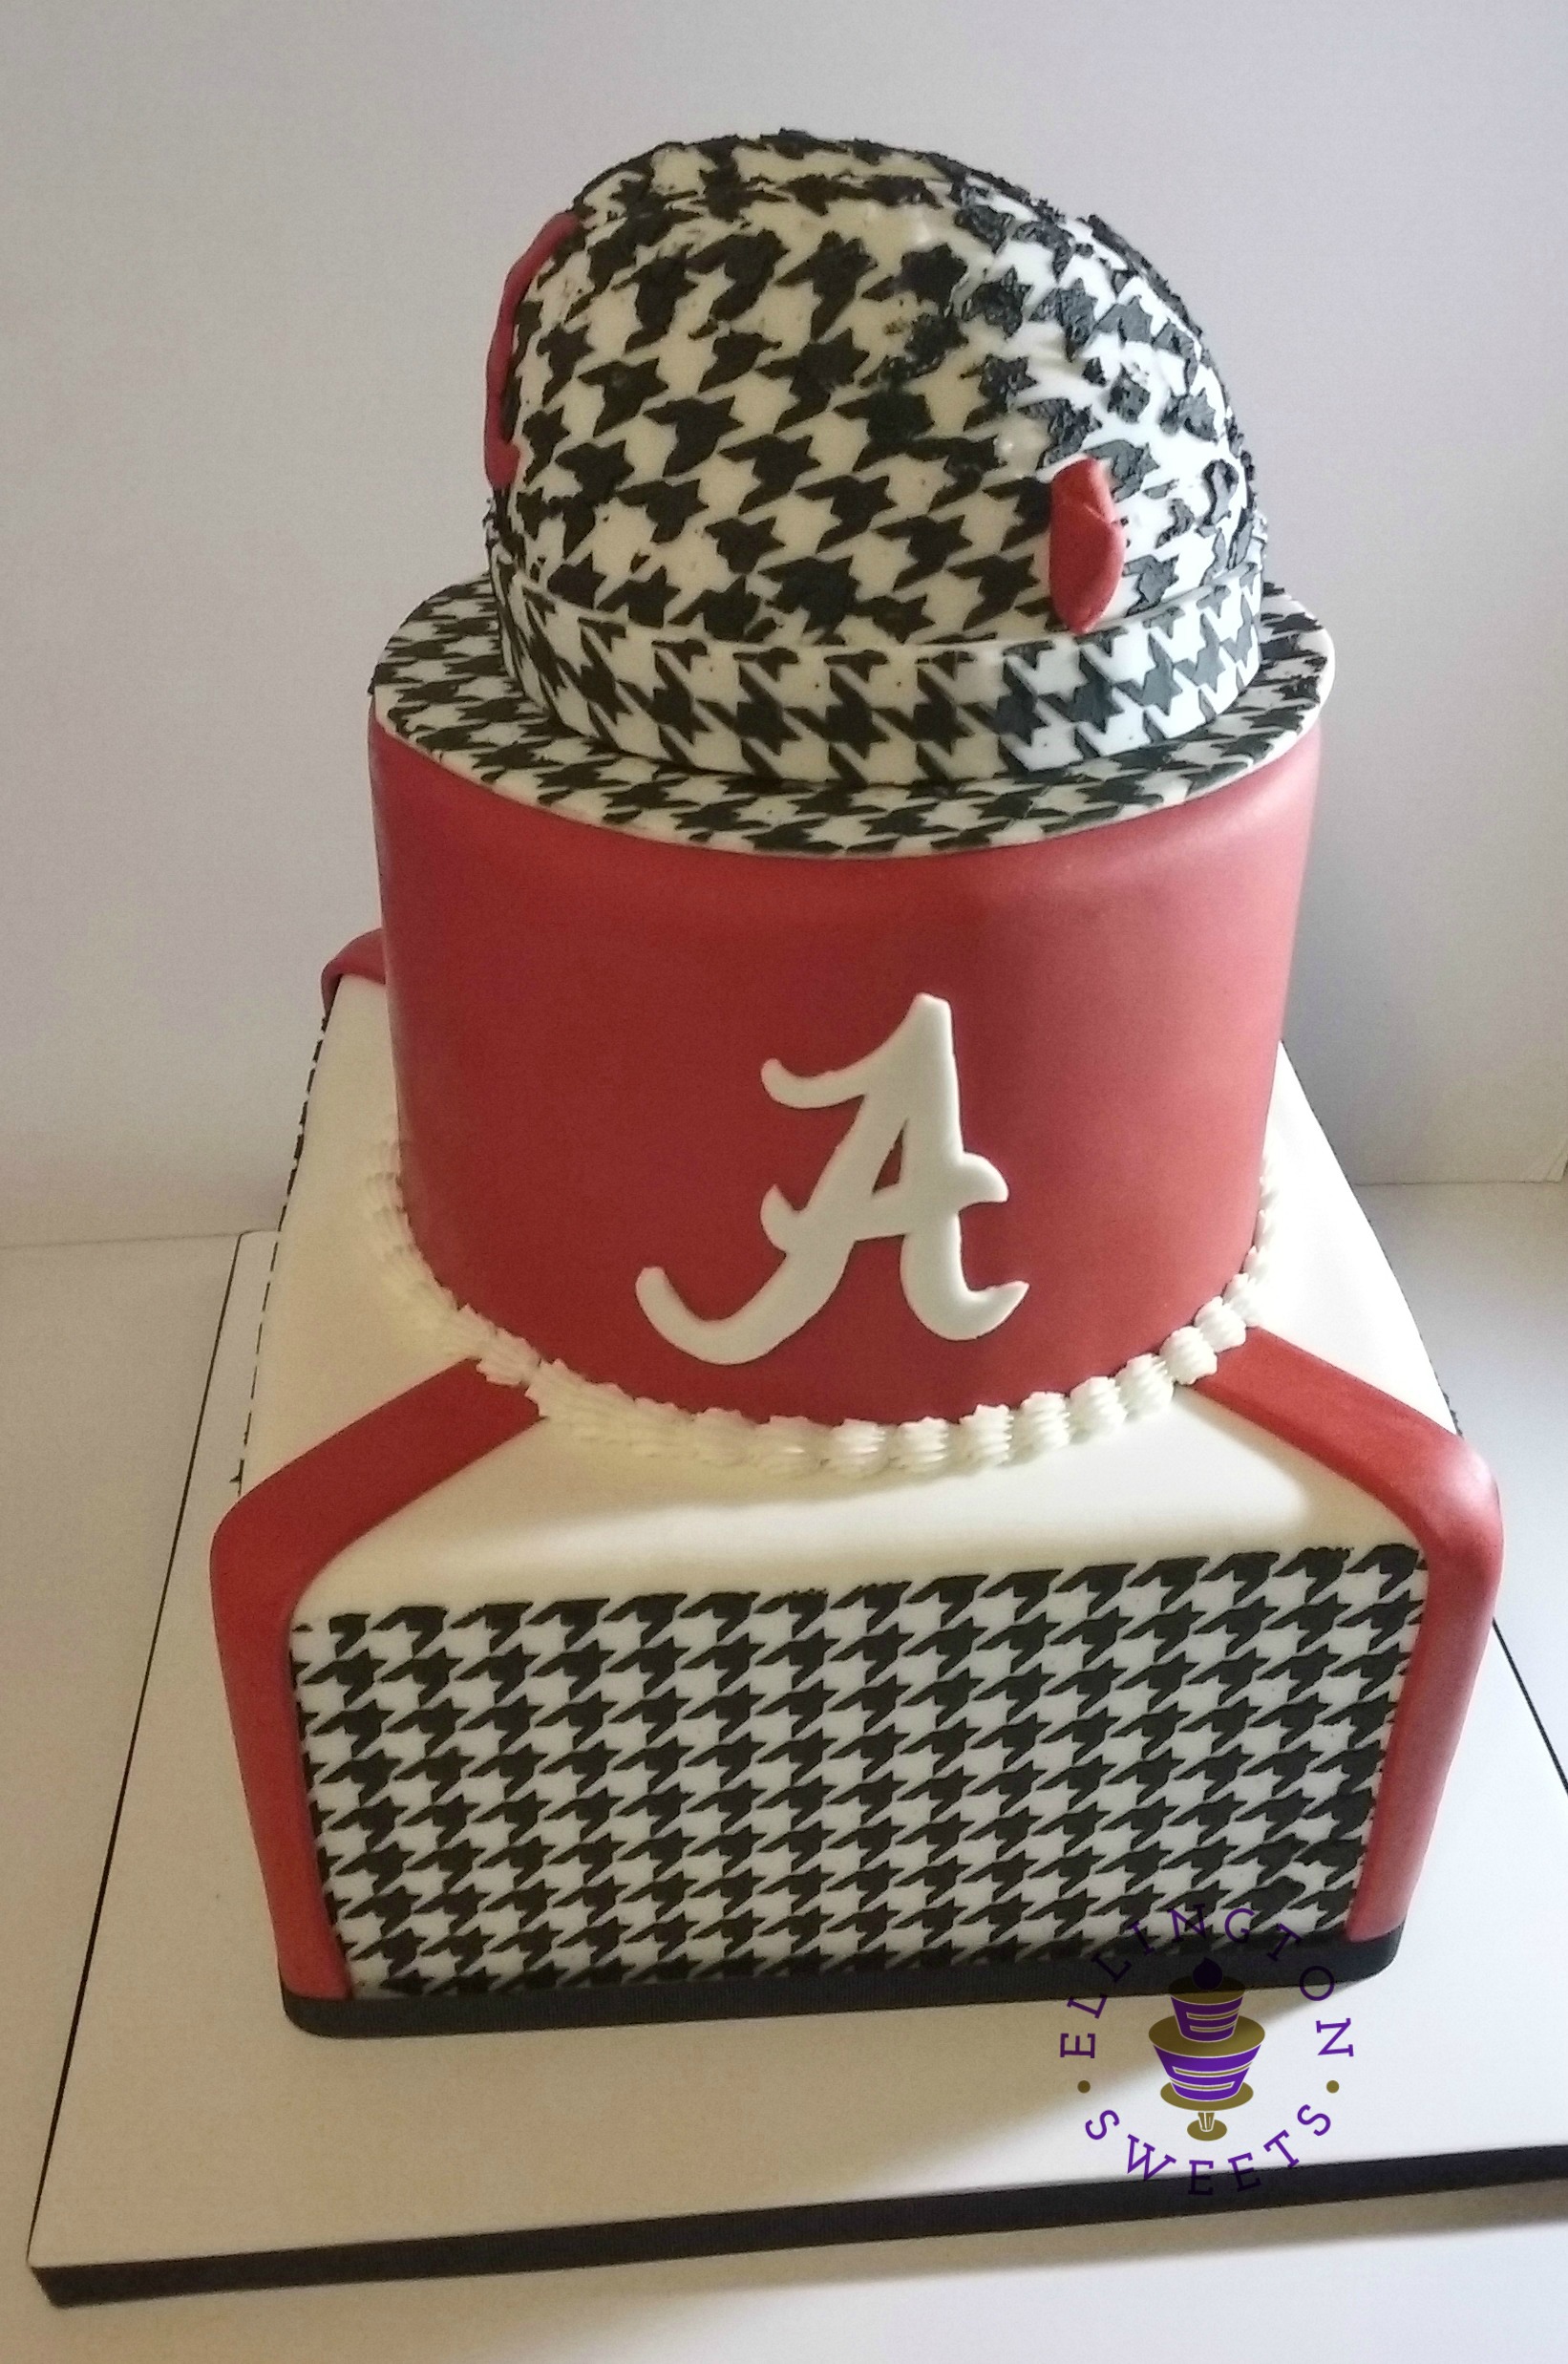 Alabama cake edited.jpg